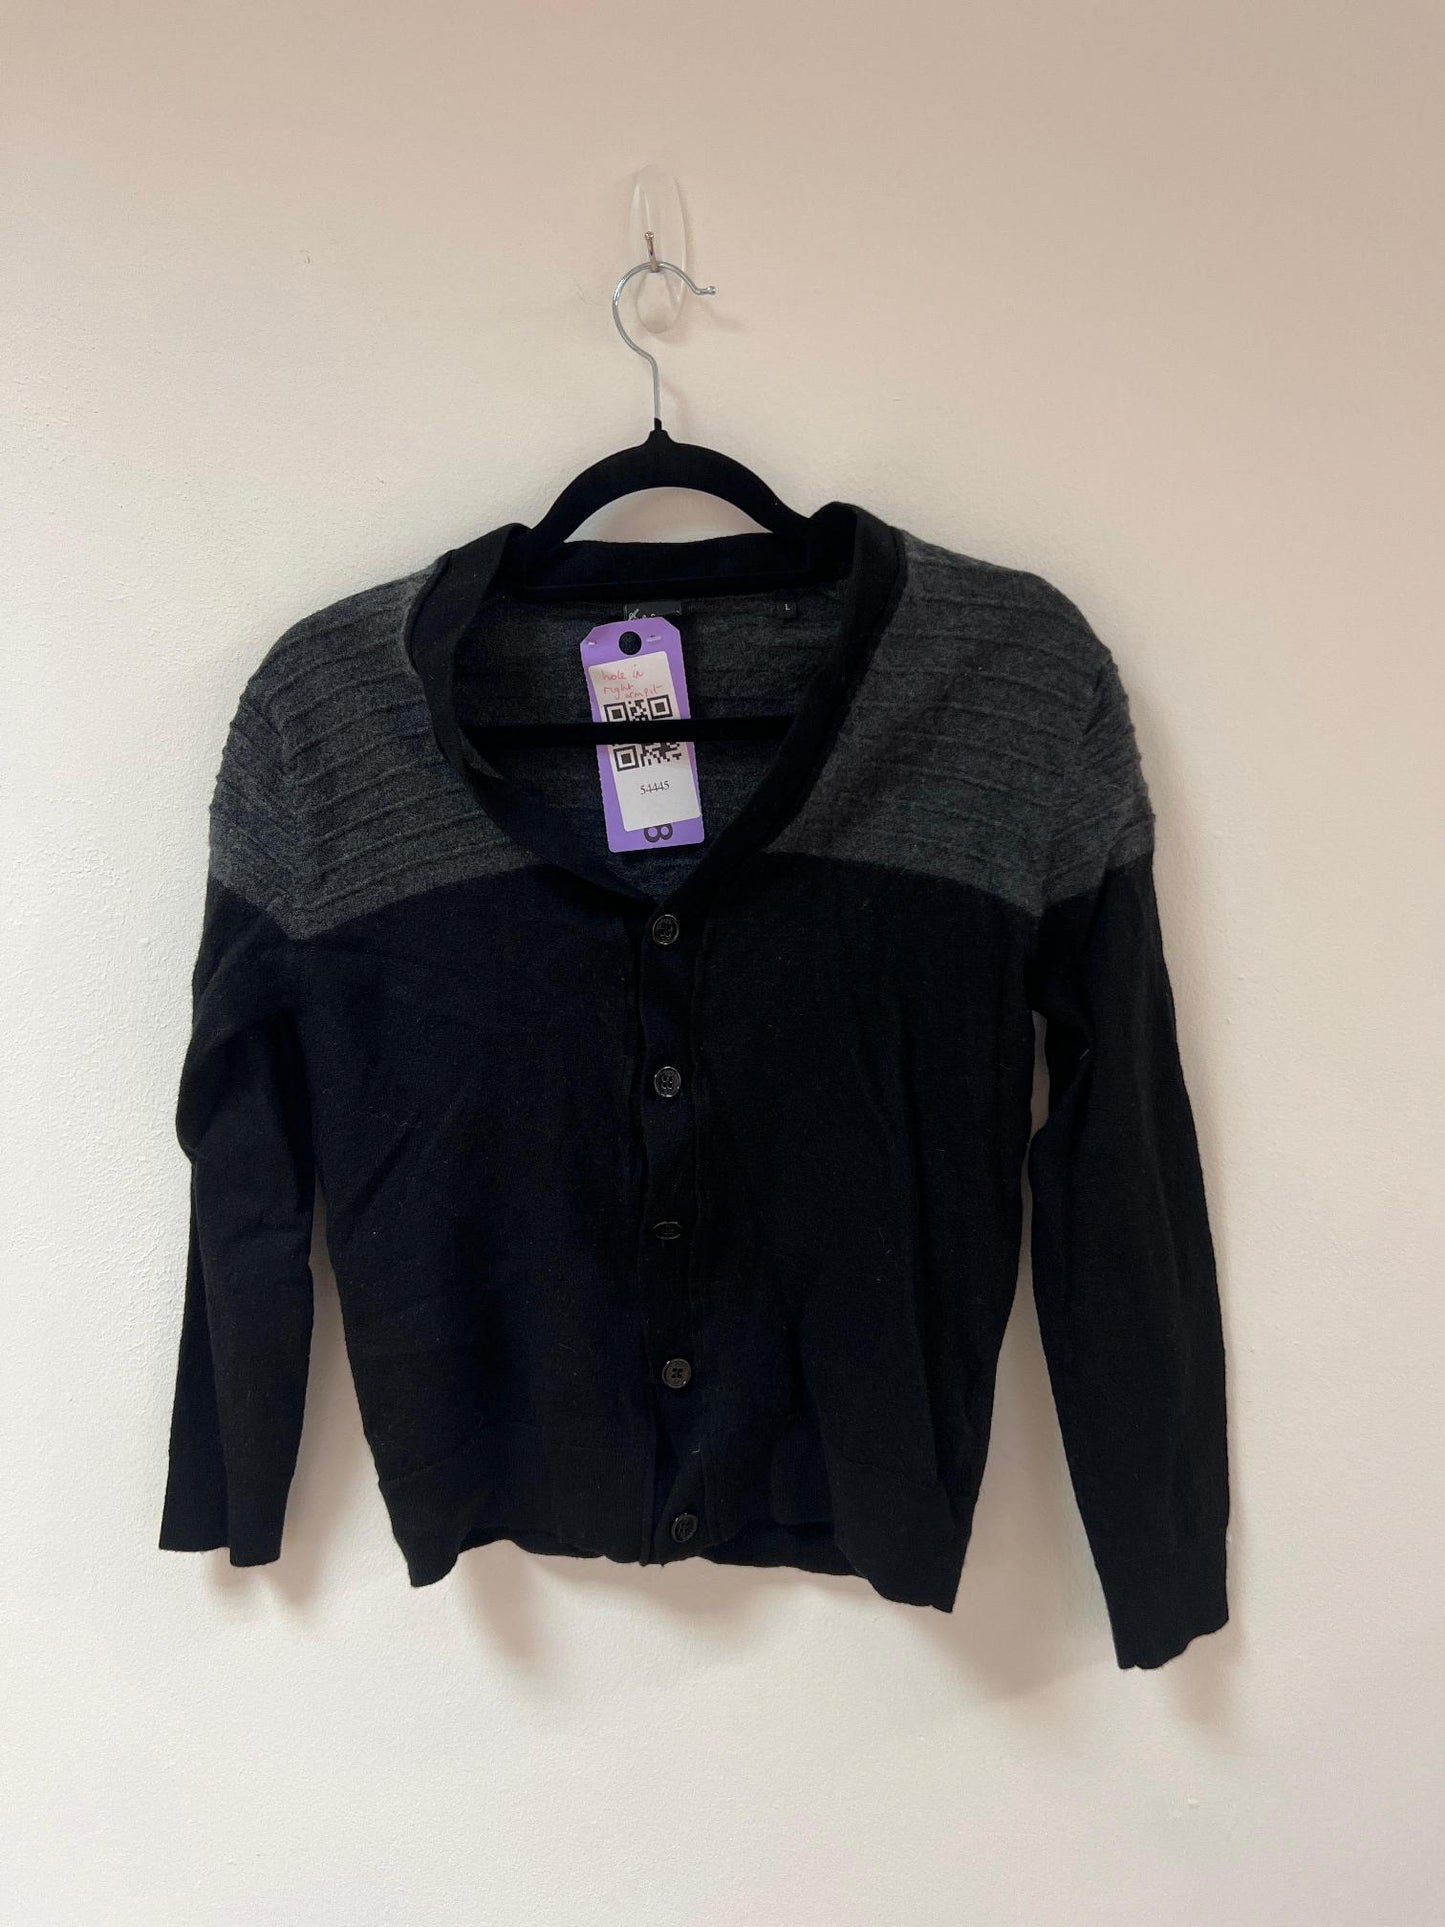 Black and grey wool cardigan, Paul Smith, size 10 - Damaged Item Sale